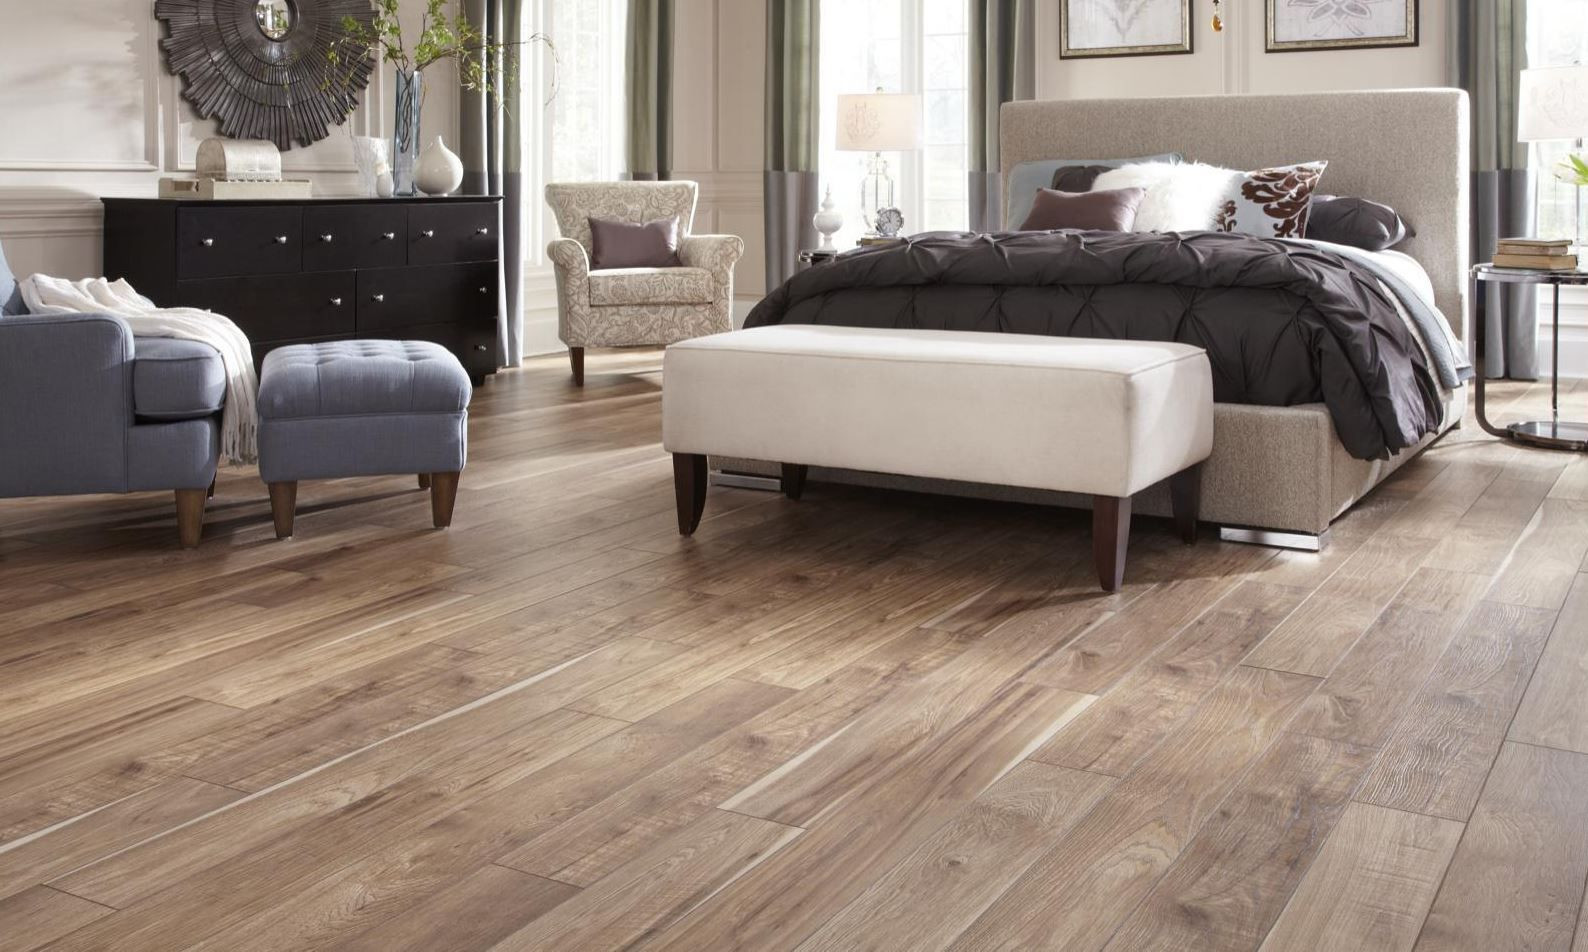 wide plank oak hardwood flooring of luxury vinyl plank flooring that looks like wood for mannington adura luxury vinyl plank flooring 57aa7d065f9b58974a2be49e jpg